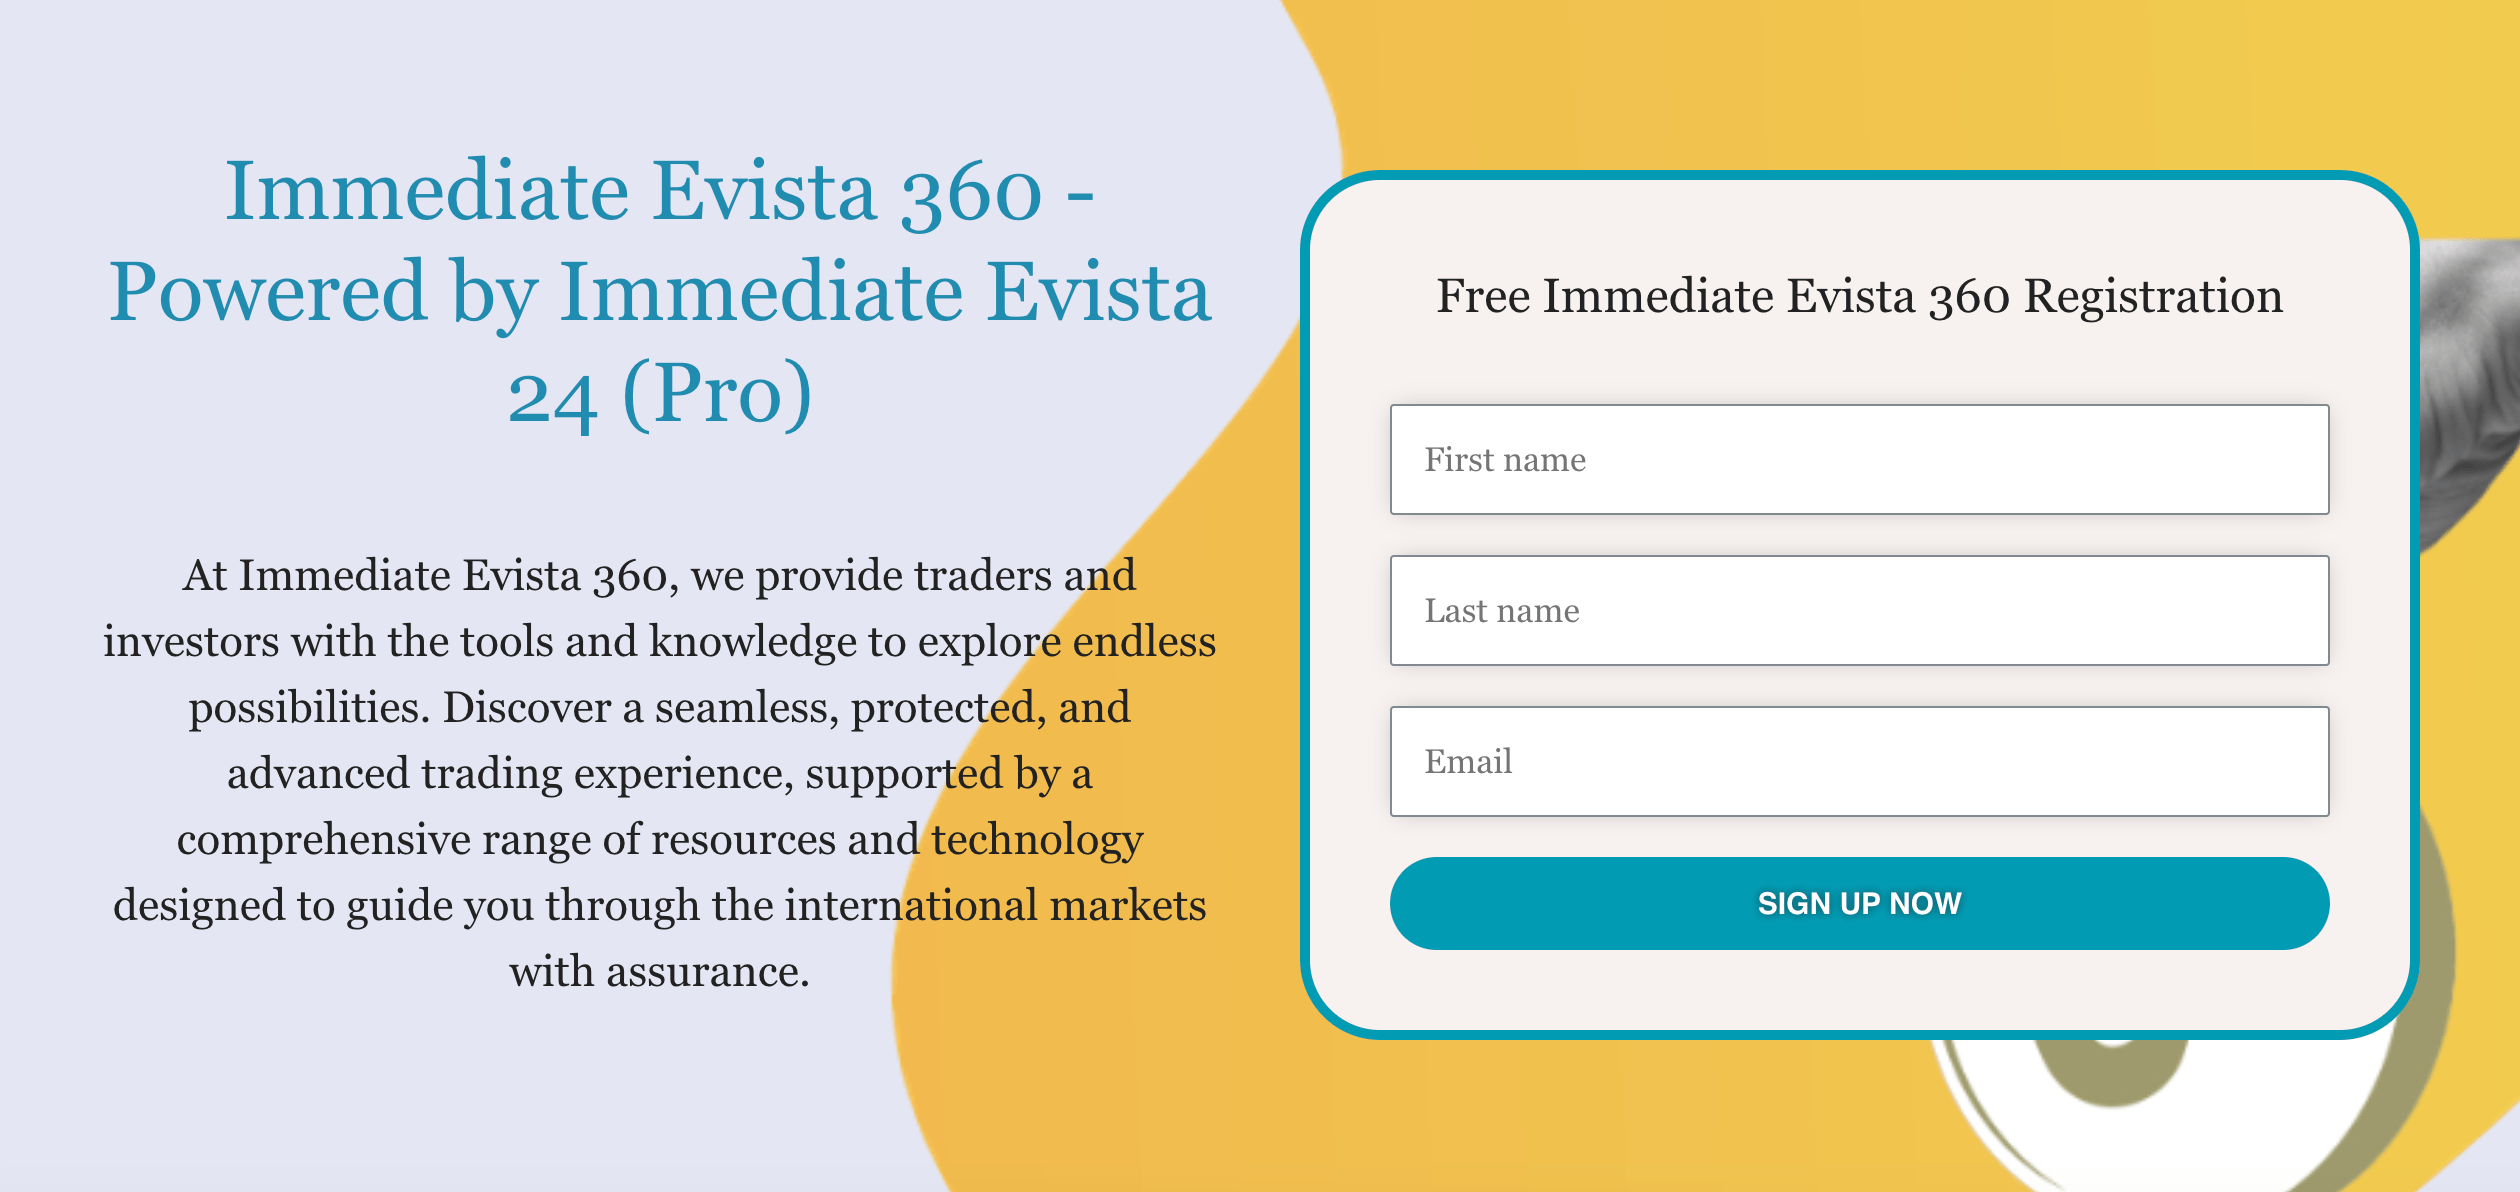 Immediate Evista 360 (V 6.0) - main